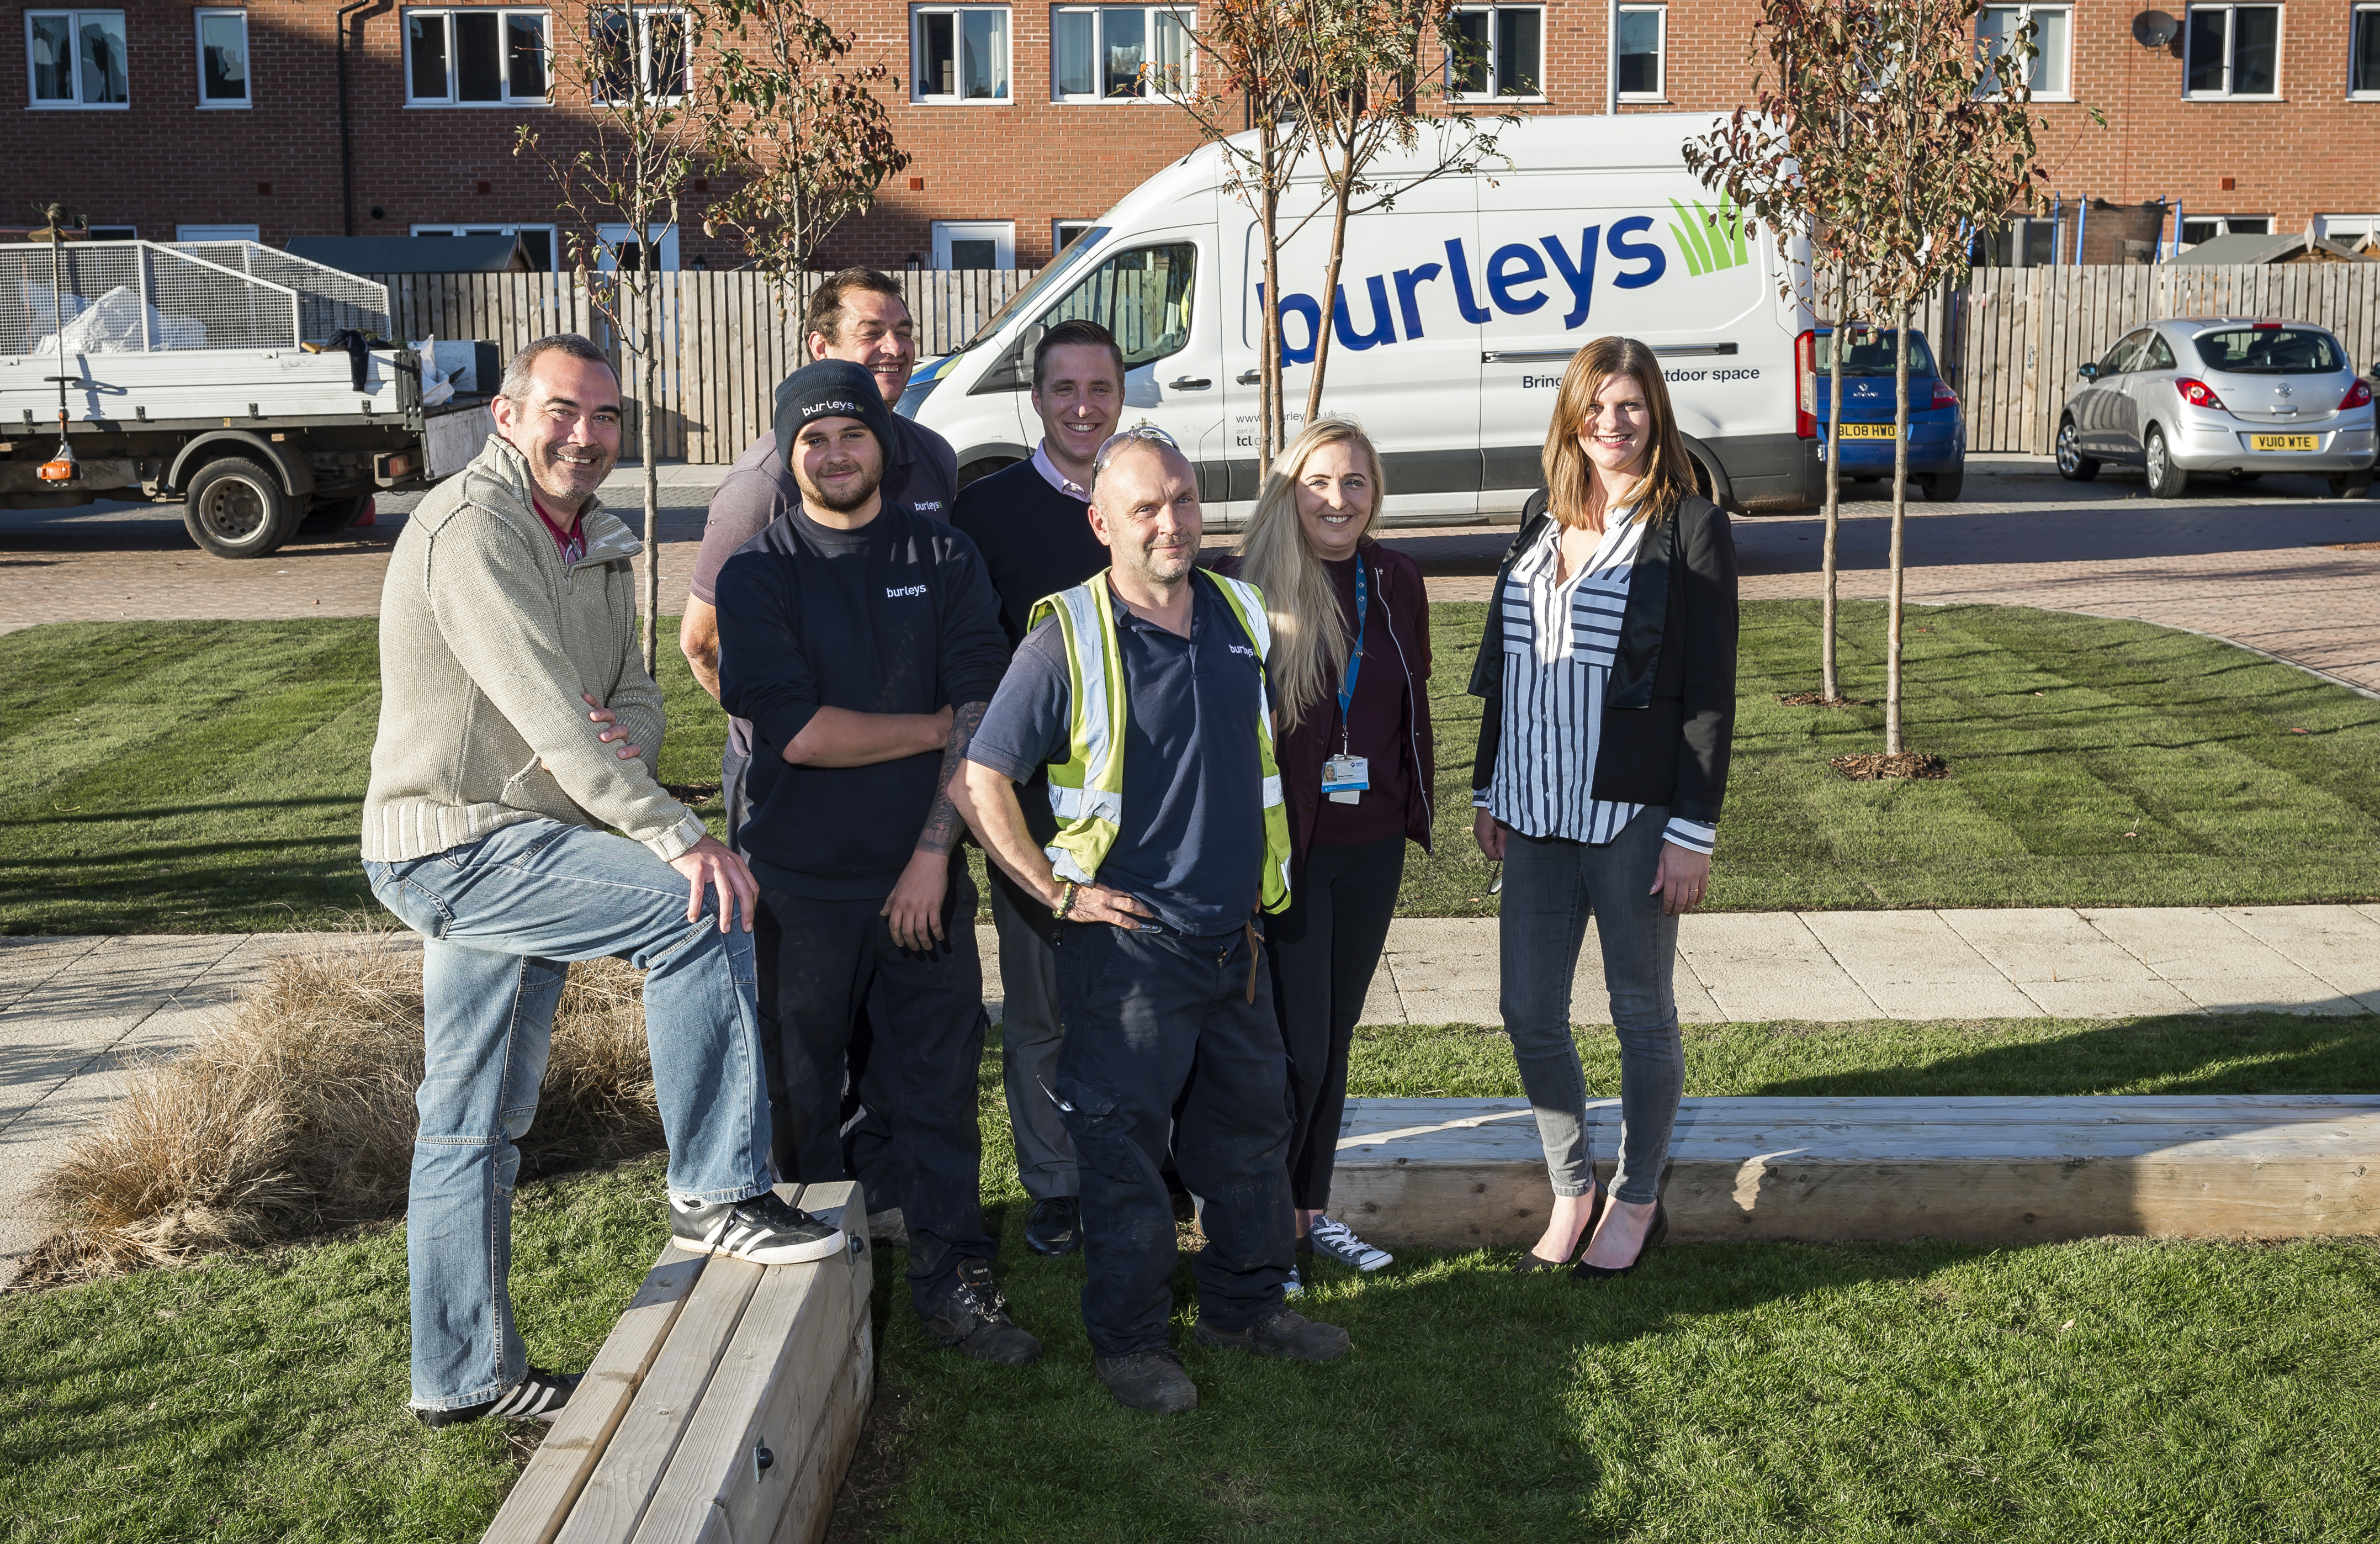 Longhurst Group staff teamed up with contractors Burleys to spruce up Allen Road in Rushden